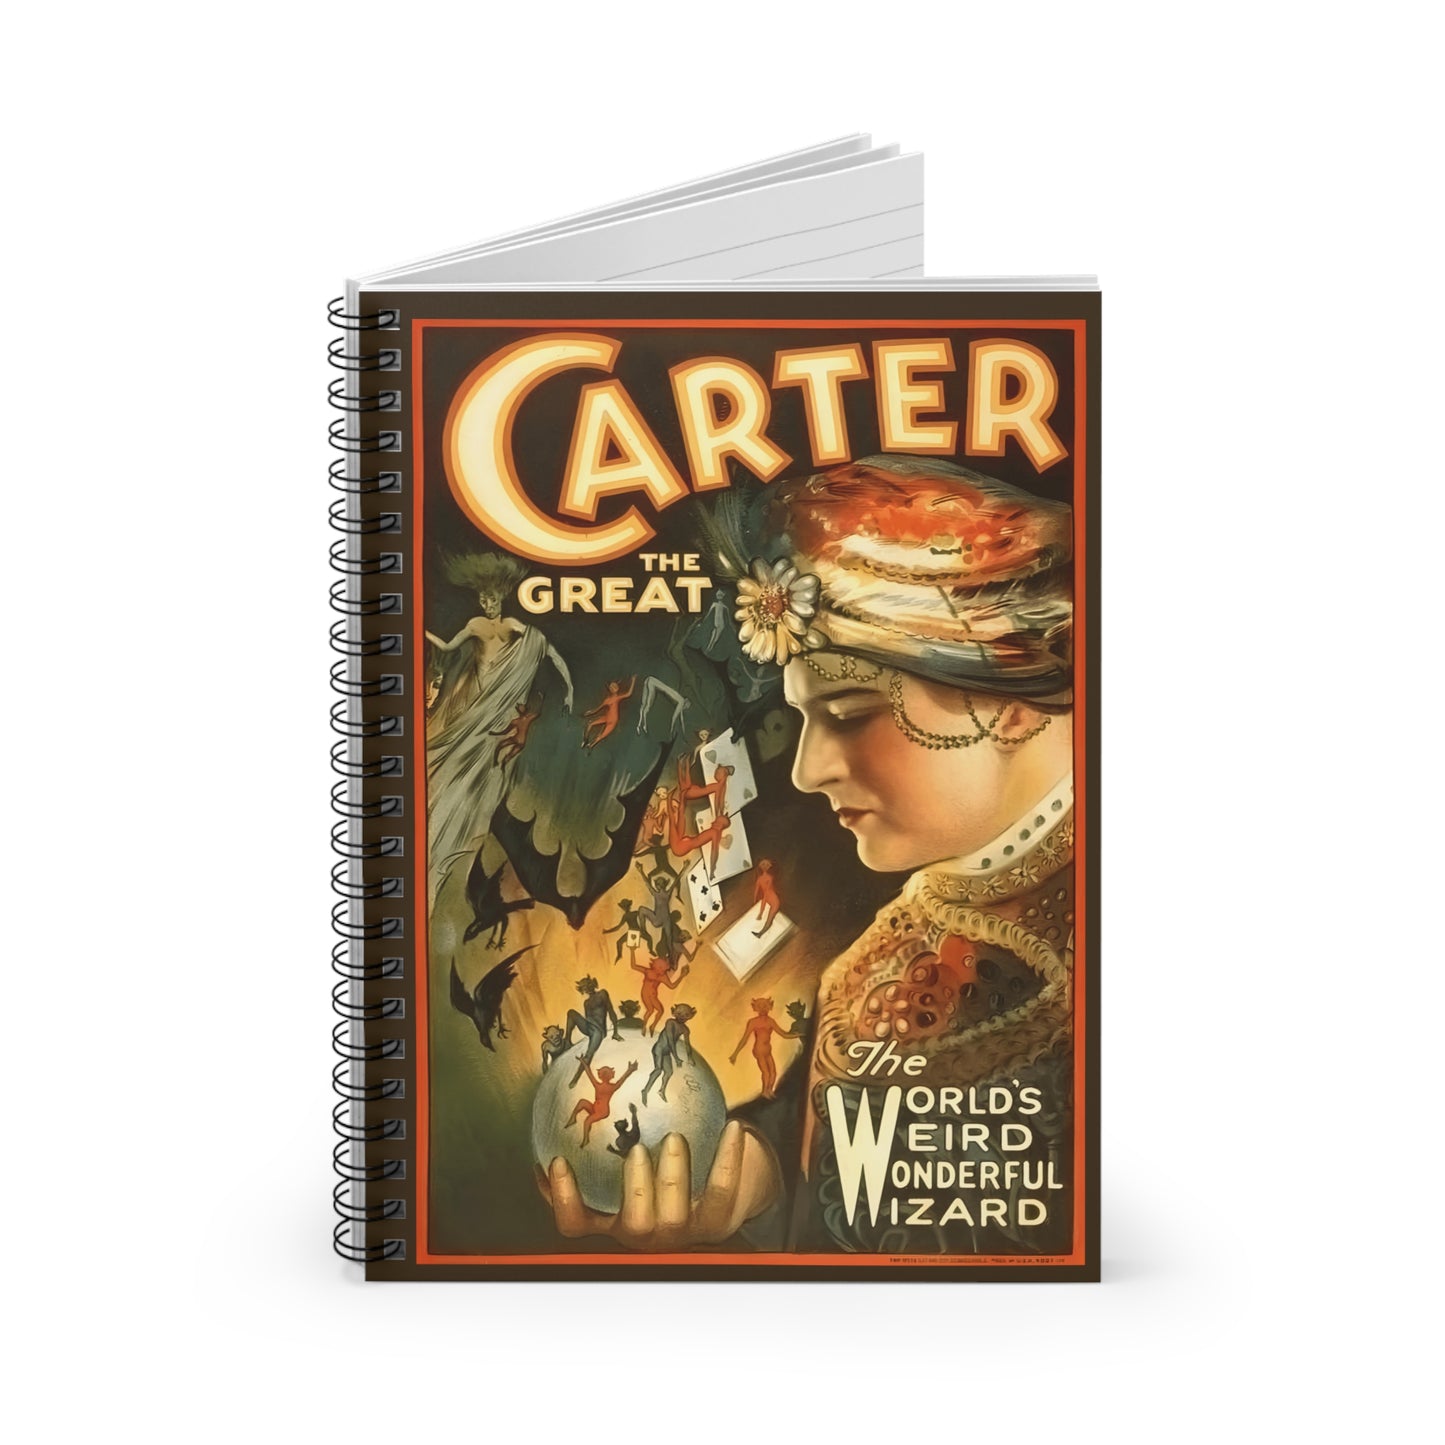 Carter the Great Vaudeville Spiral Notebook - Ruled Line